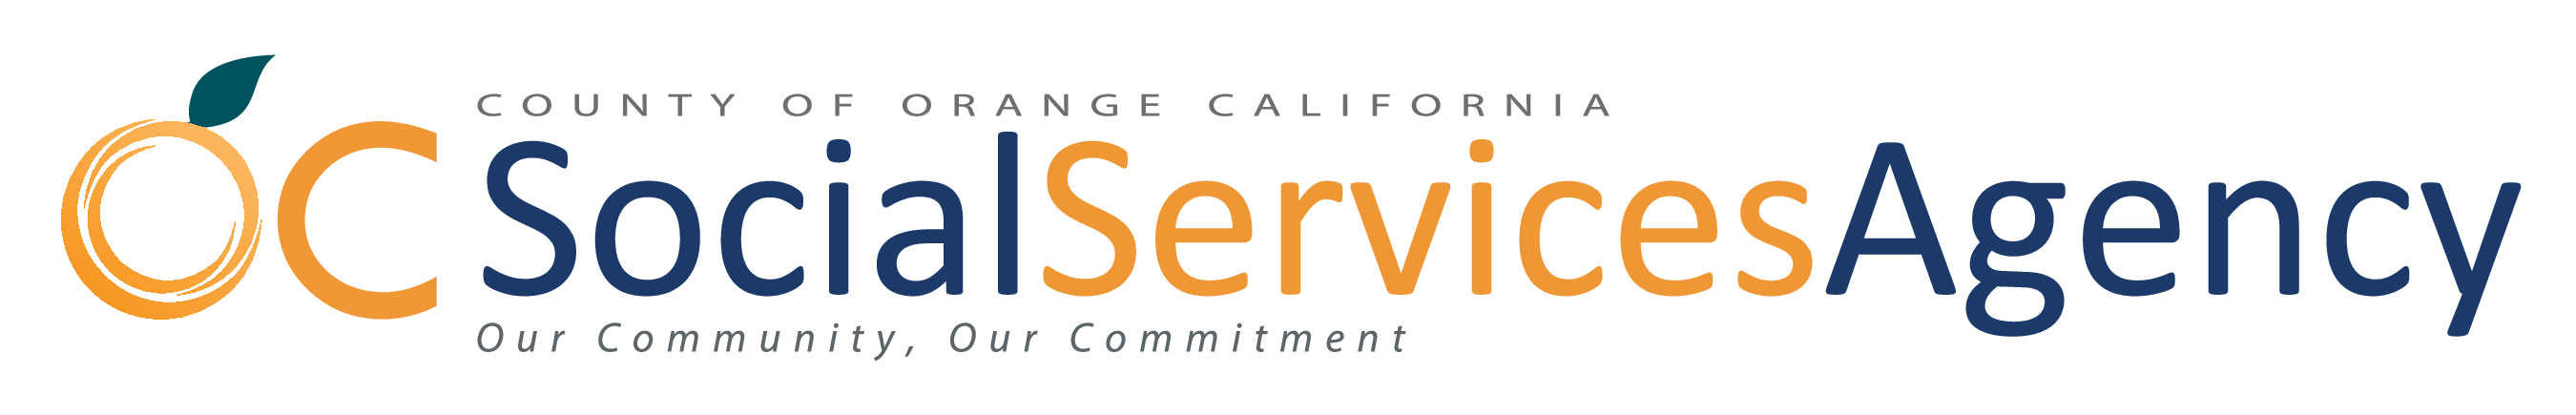 County of Orange Social Services Agency Logo -- Home